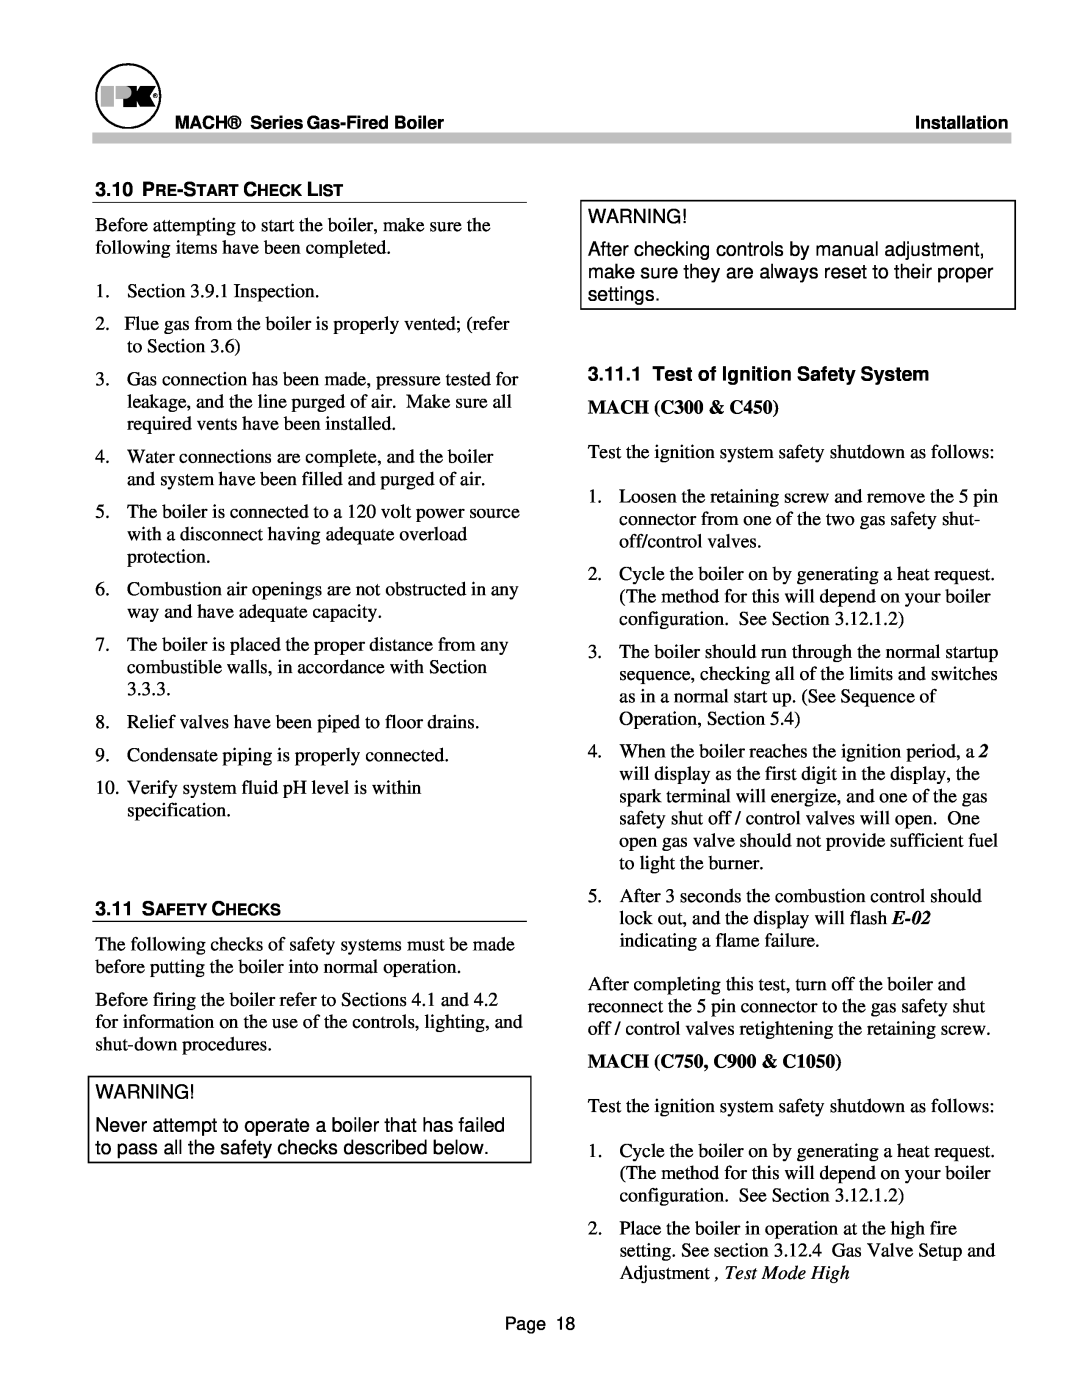 Patterson-Kelley MACH-05 manual 3.11.1Test of Ignition Safety System, MACH C300 & C450, MACH C750, C900 & C1050 